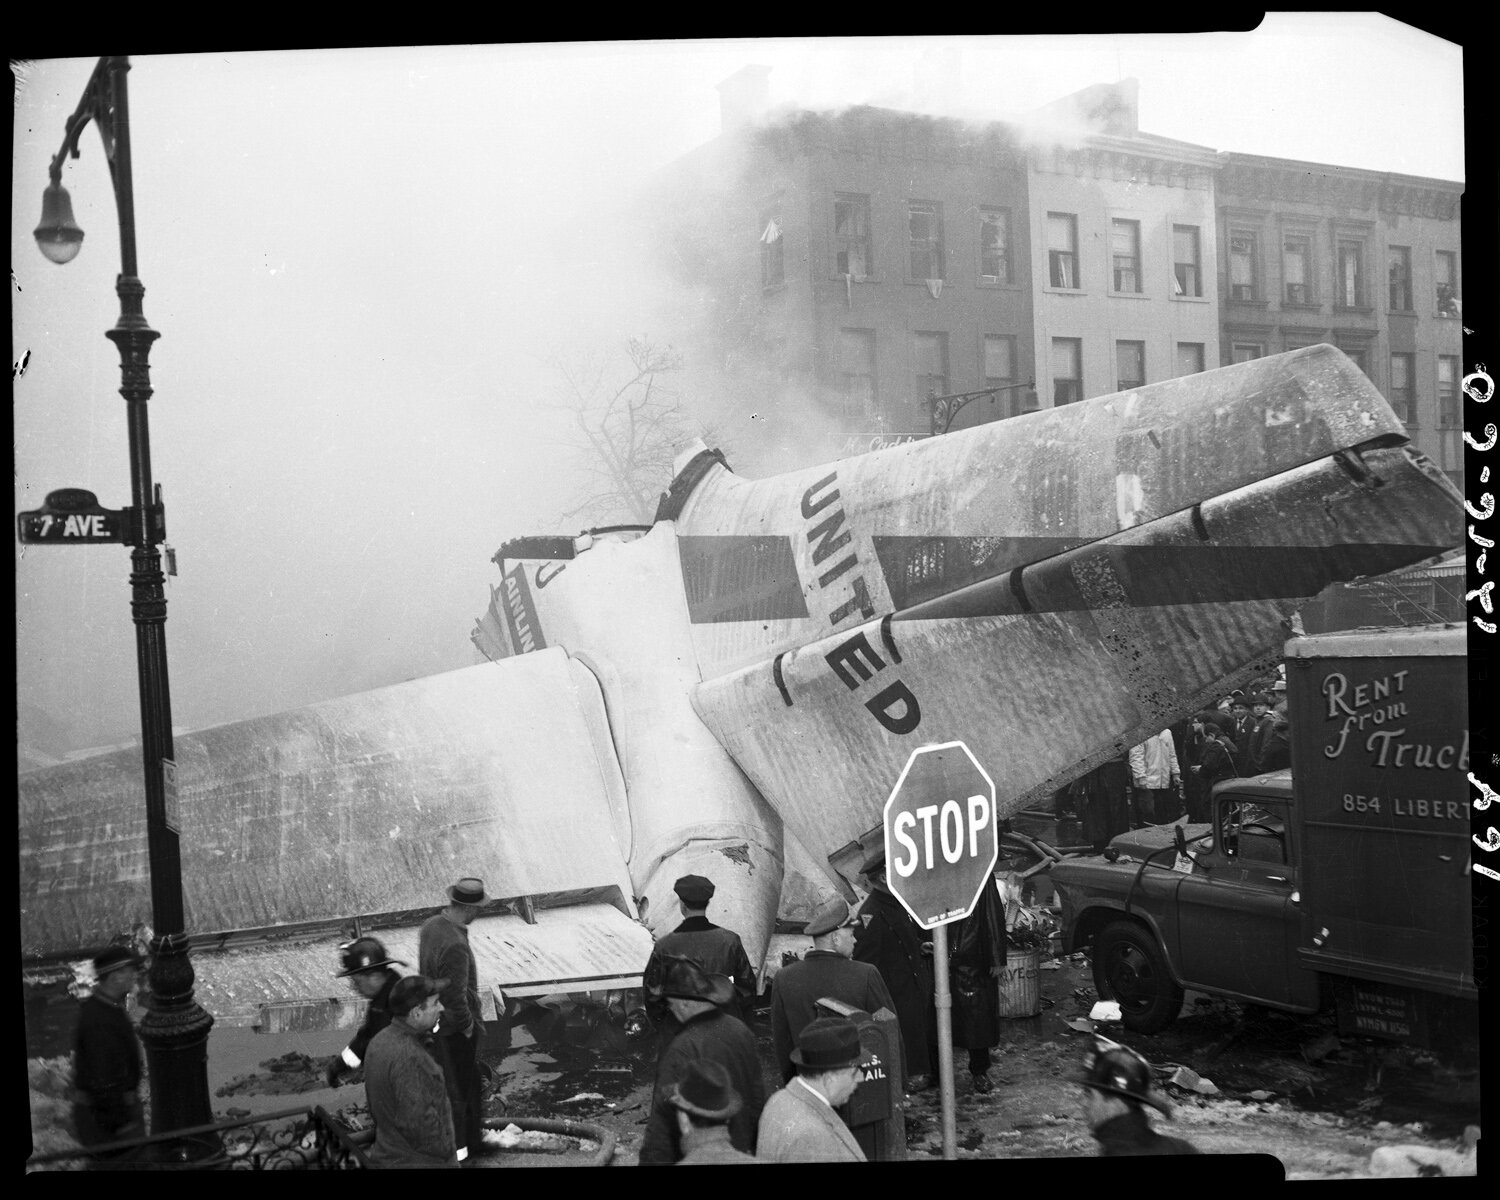 Dec. 16, 1960: Plane collision over Staten Island, Brooklyn kills